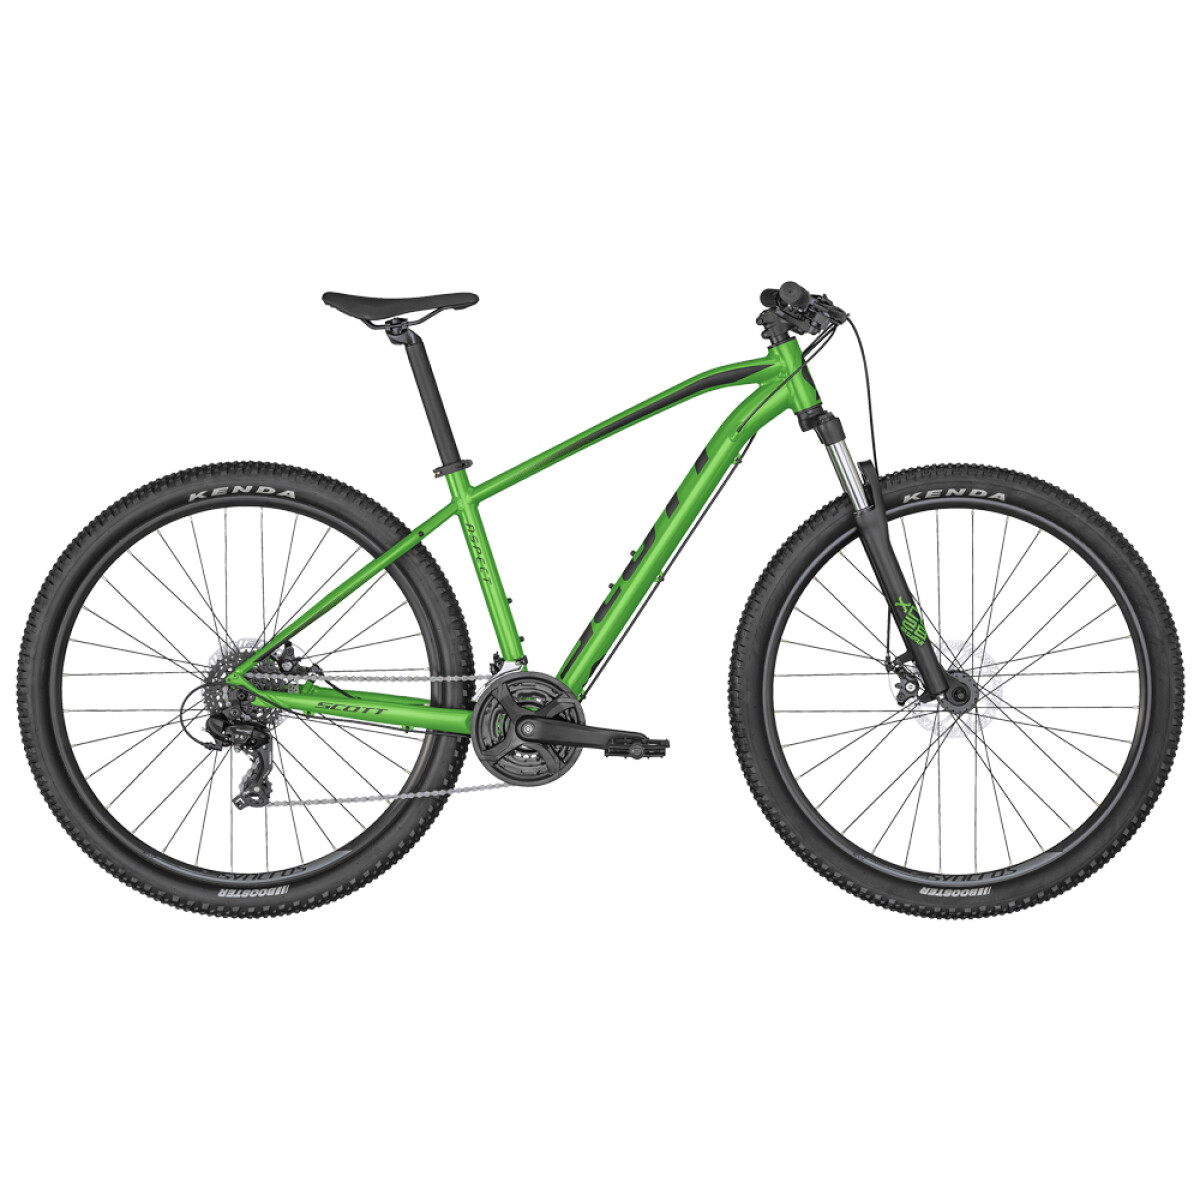 Bicicleta Scott Aspect 970 L Verde 